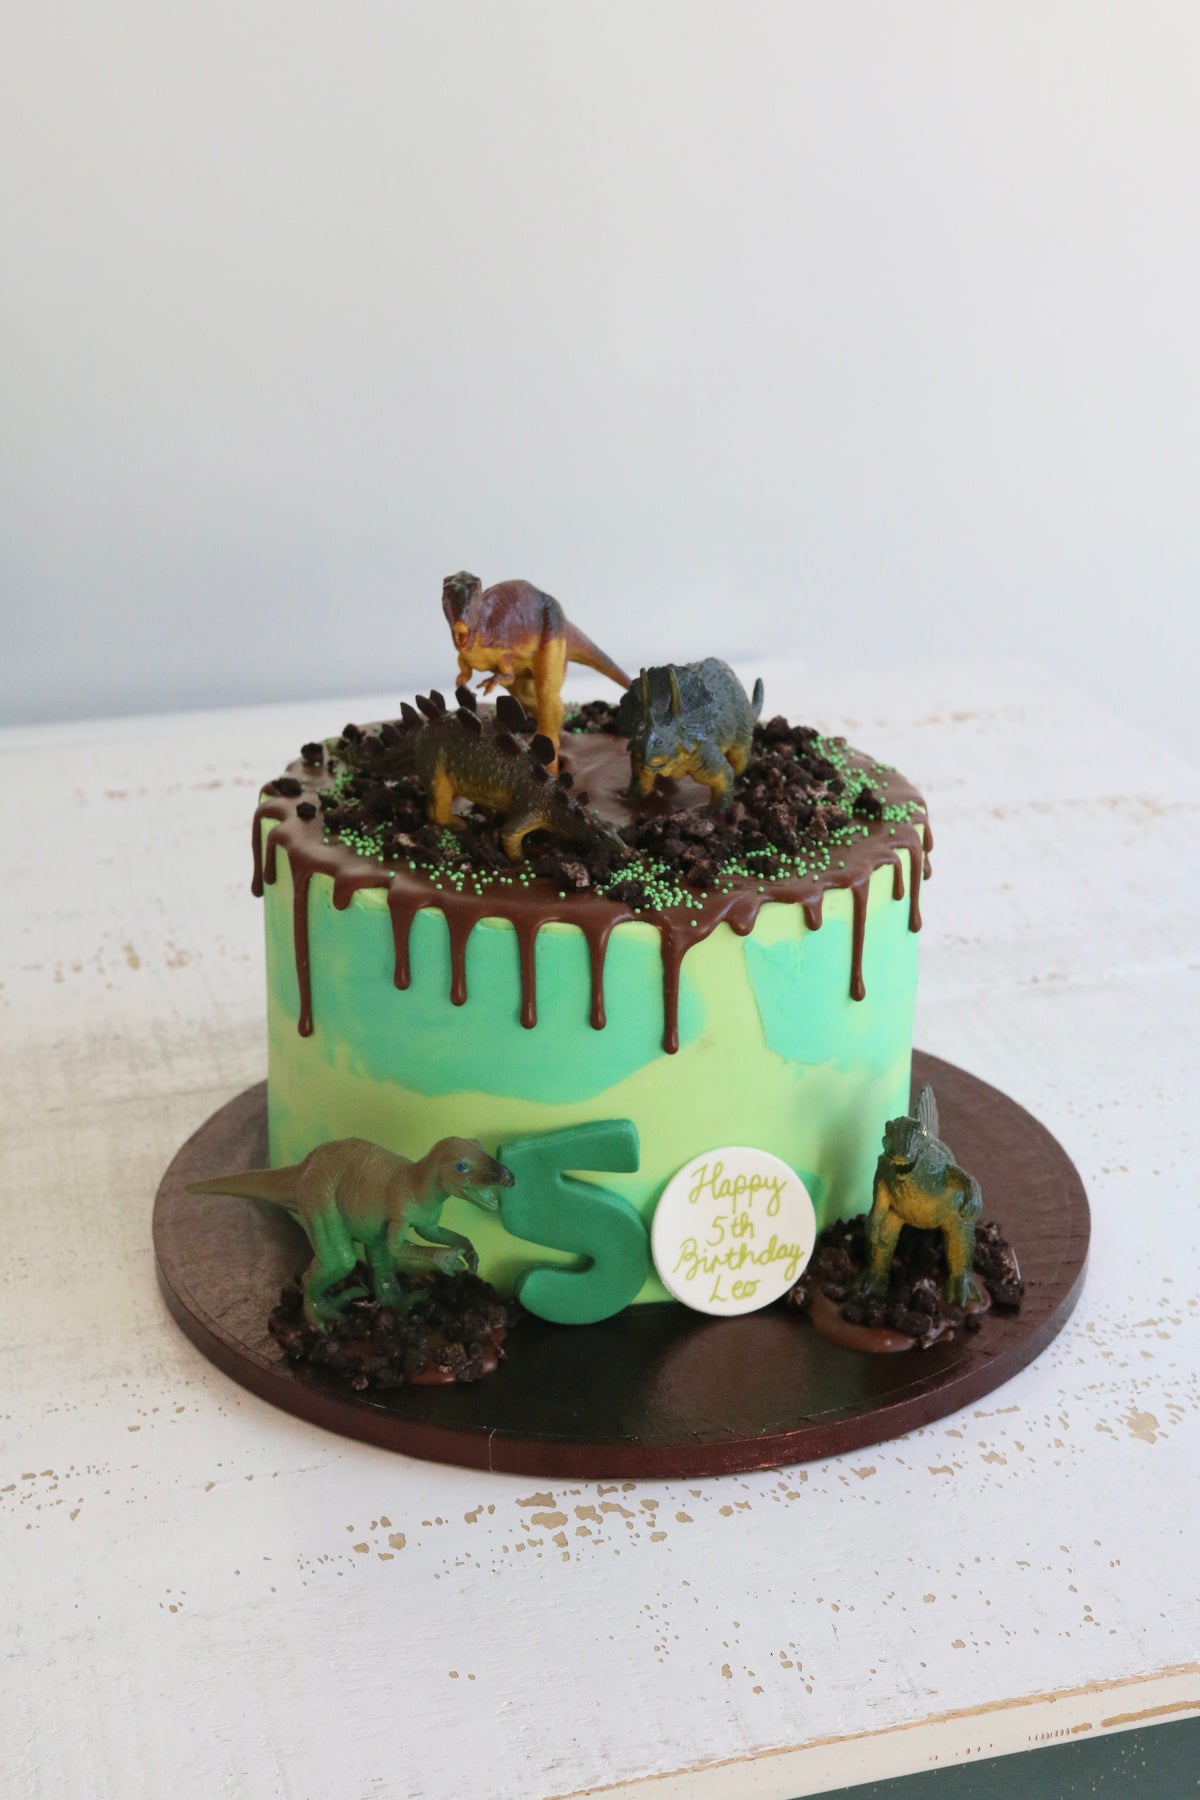 Green Dinosaur 5th Birthday Drip Cake with Toy Dinosaur Figures